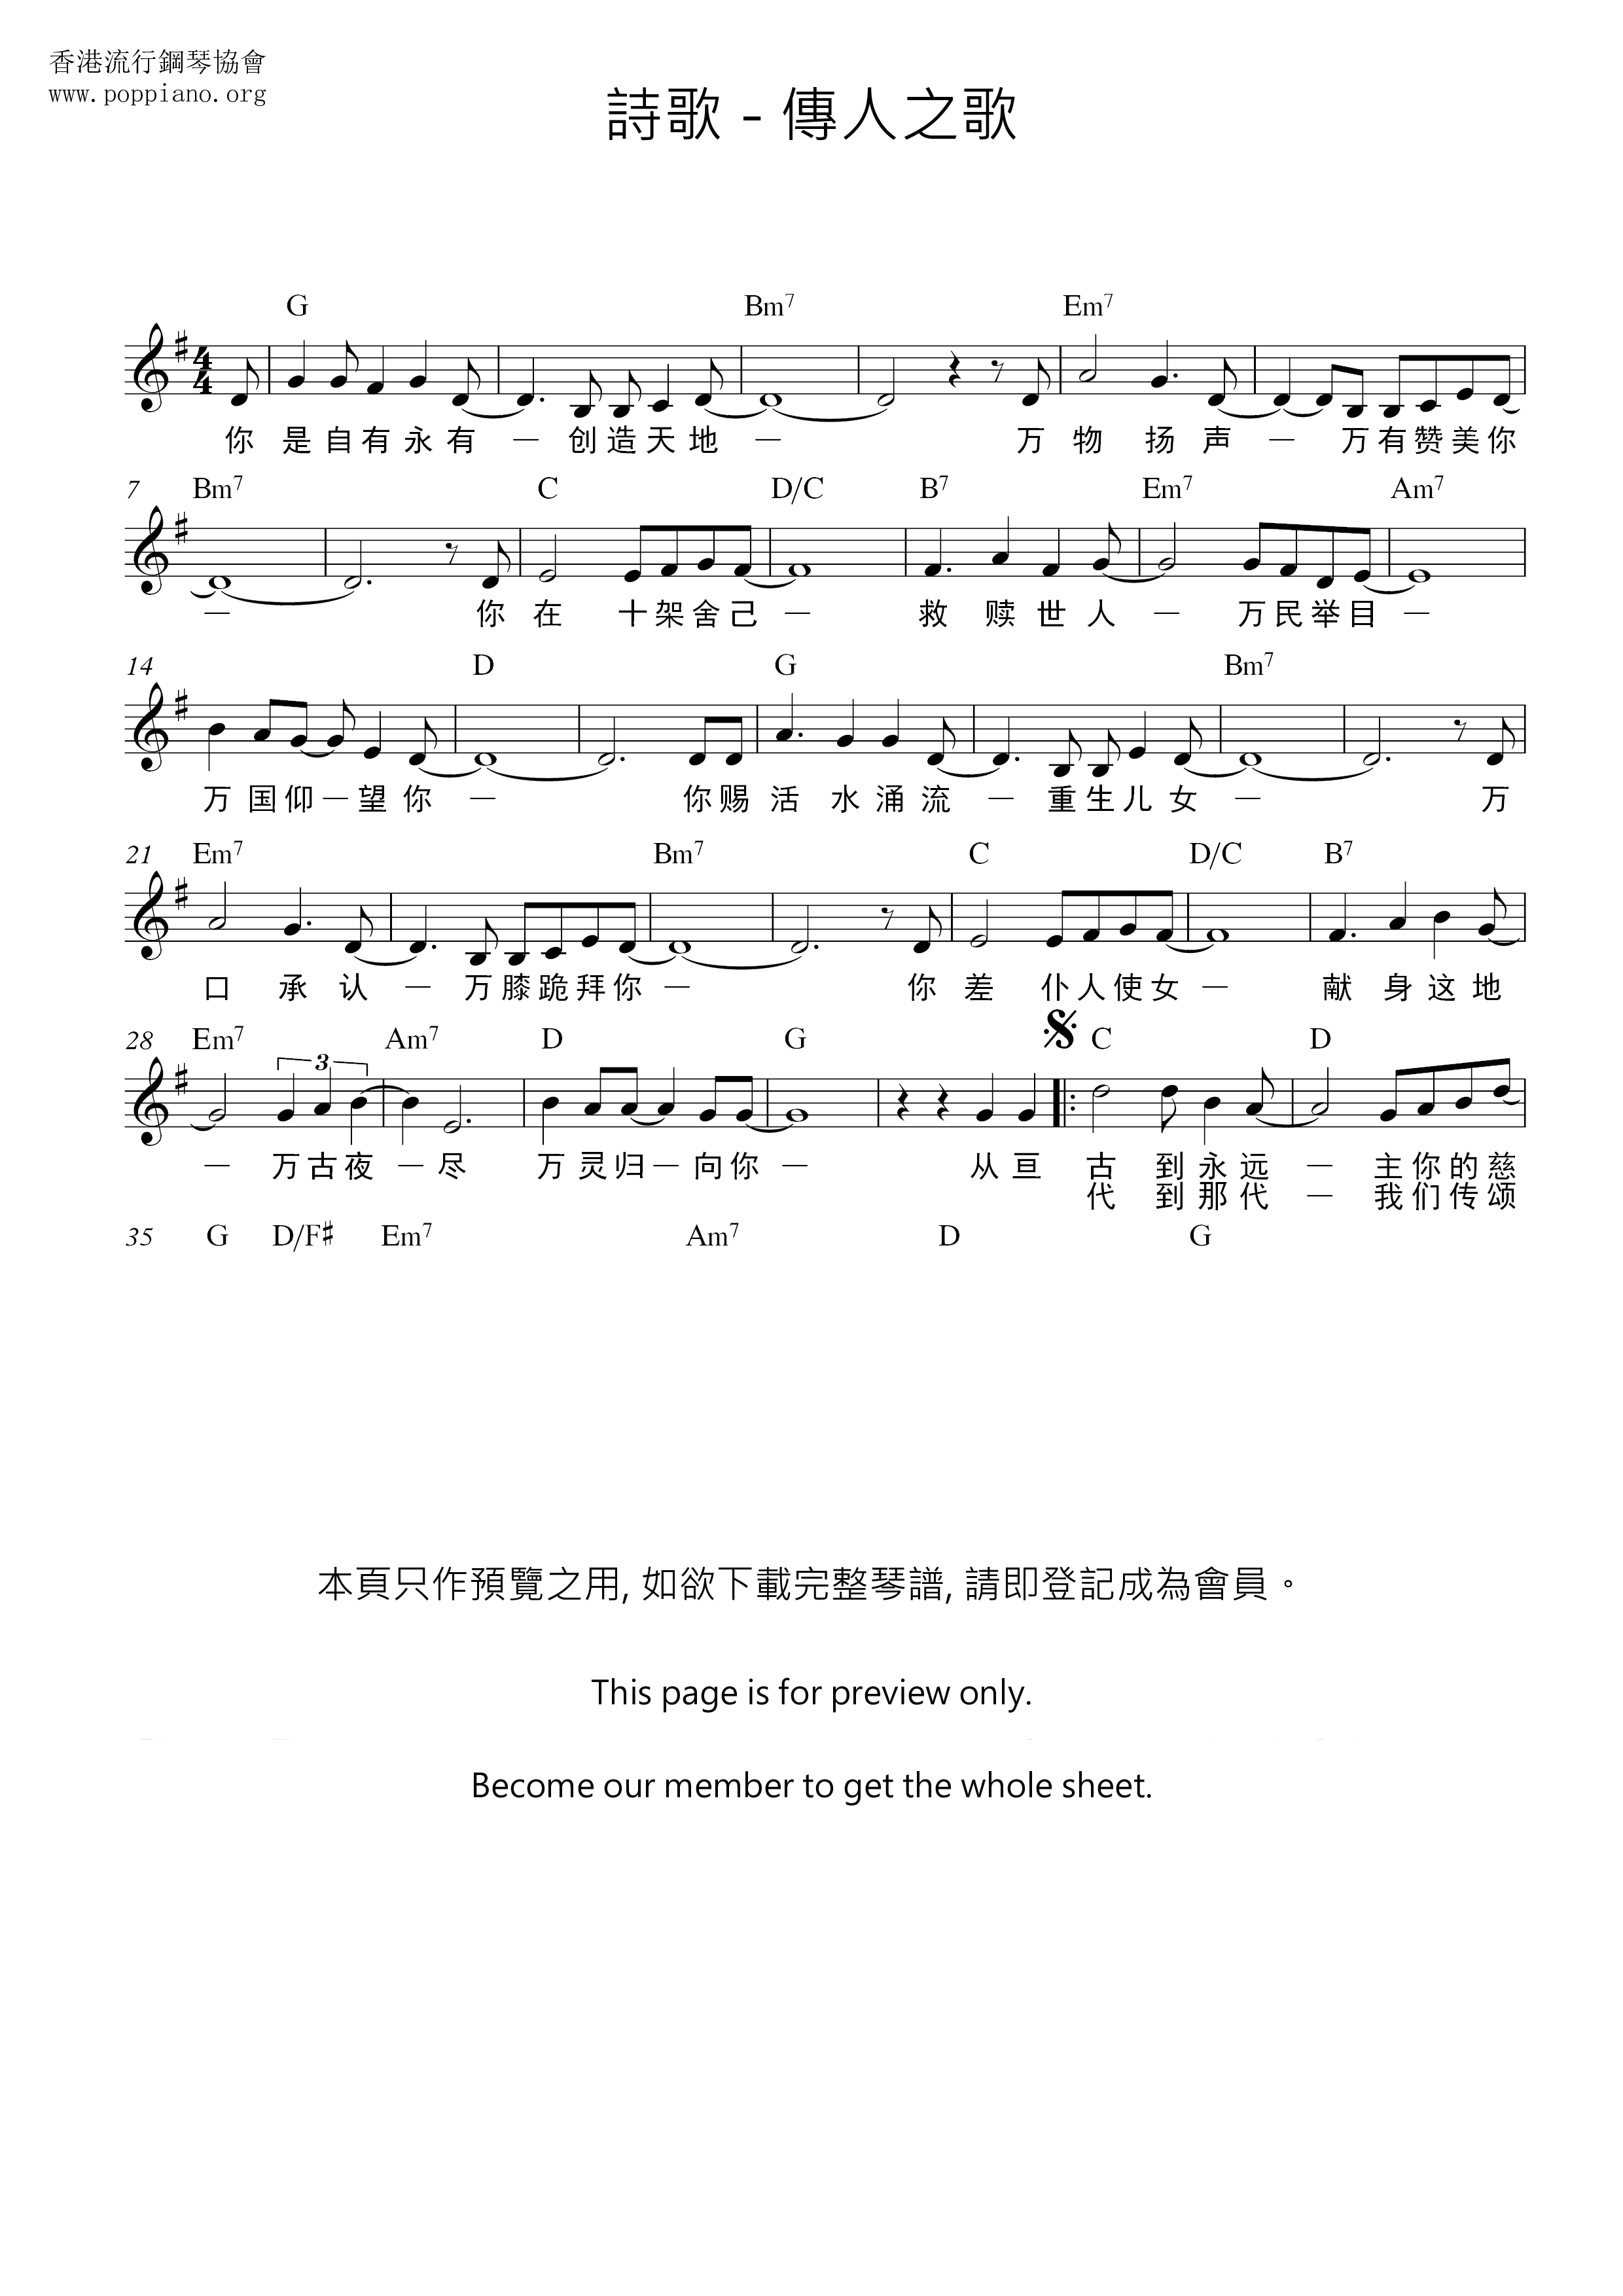 Song Of The Predecessor Score